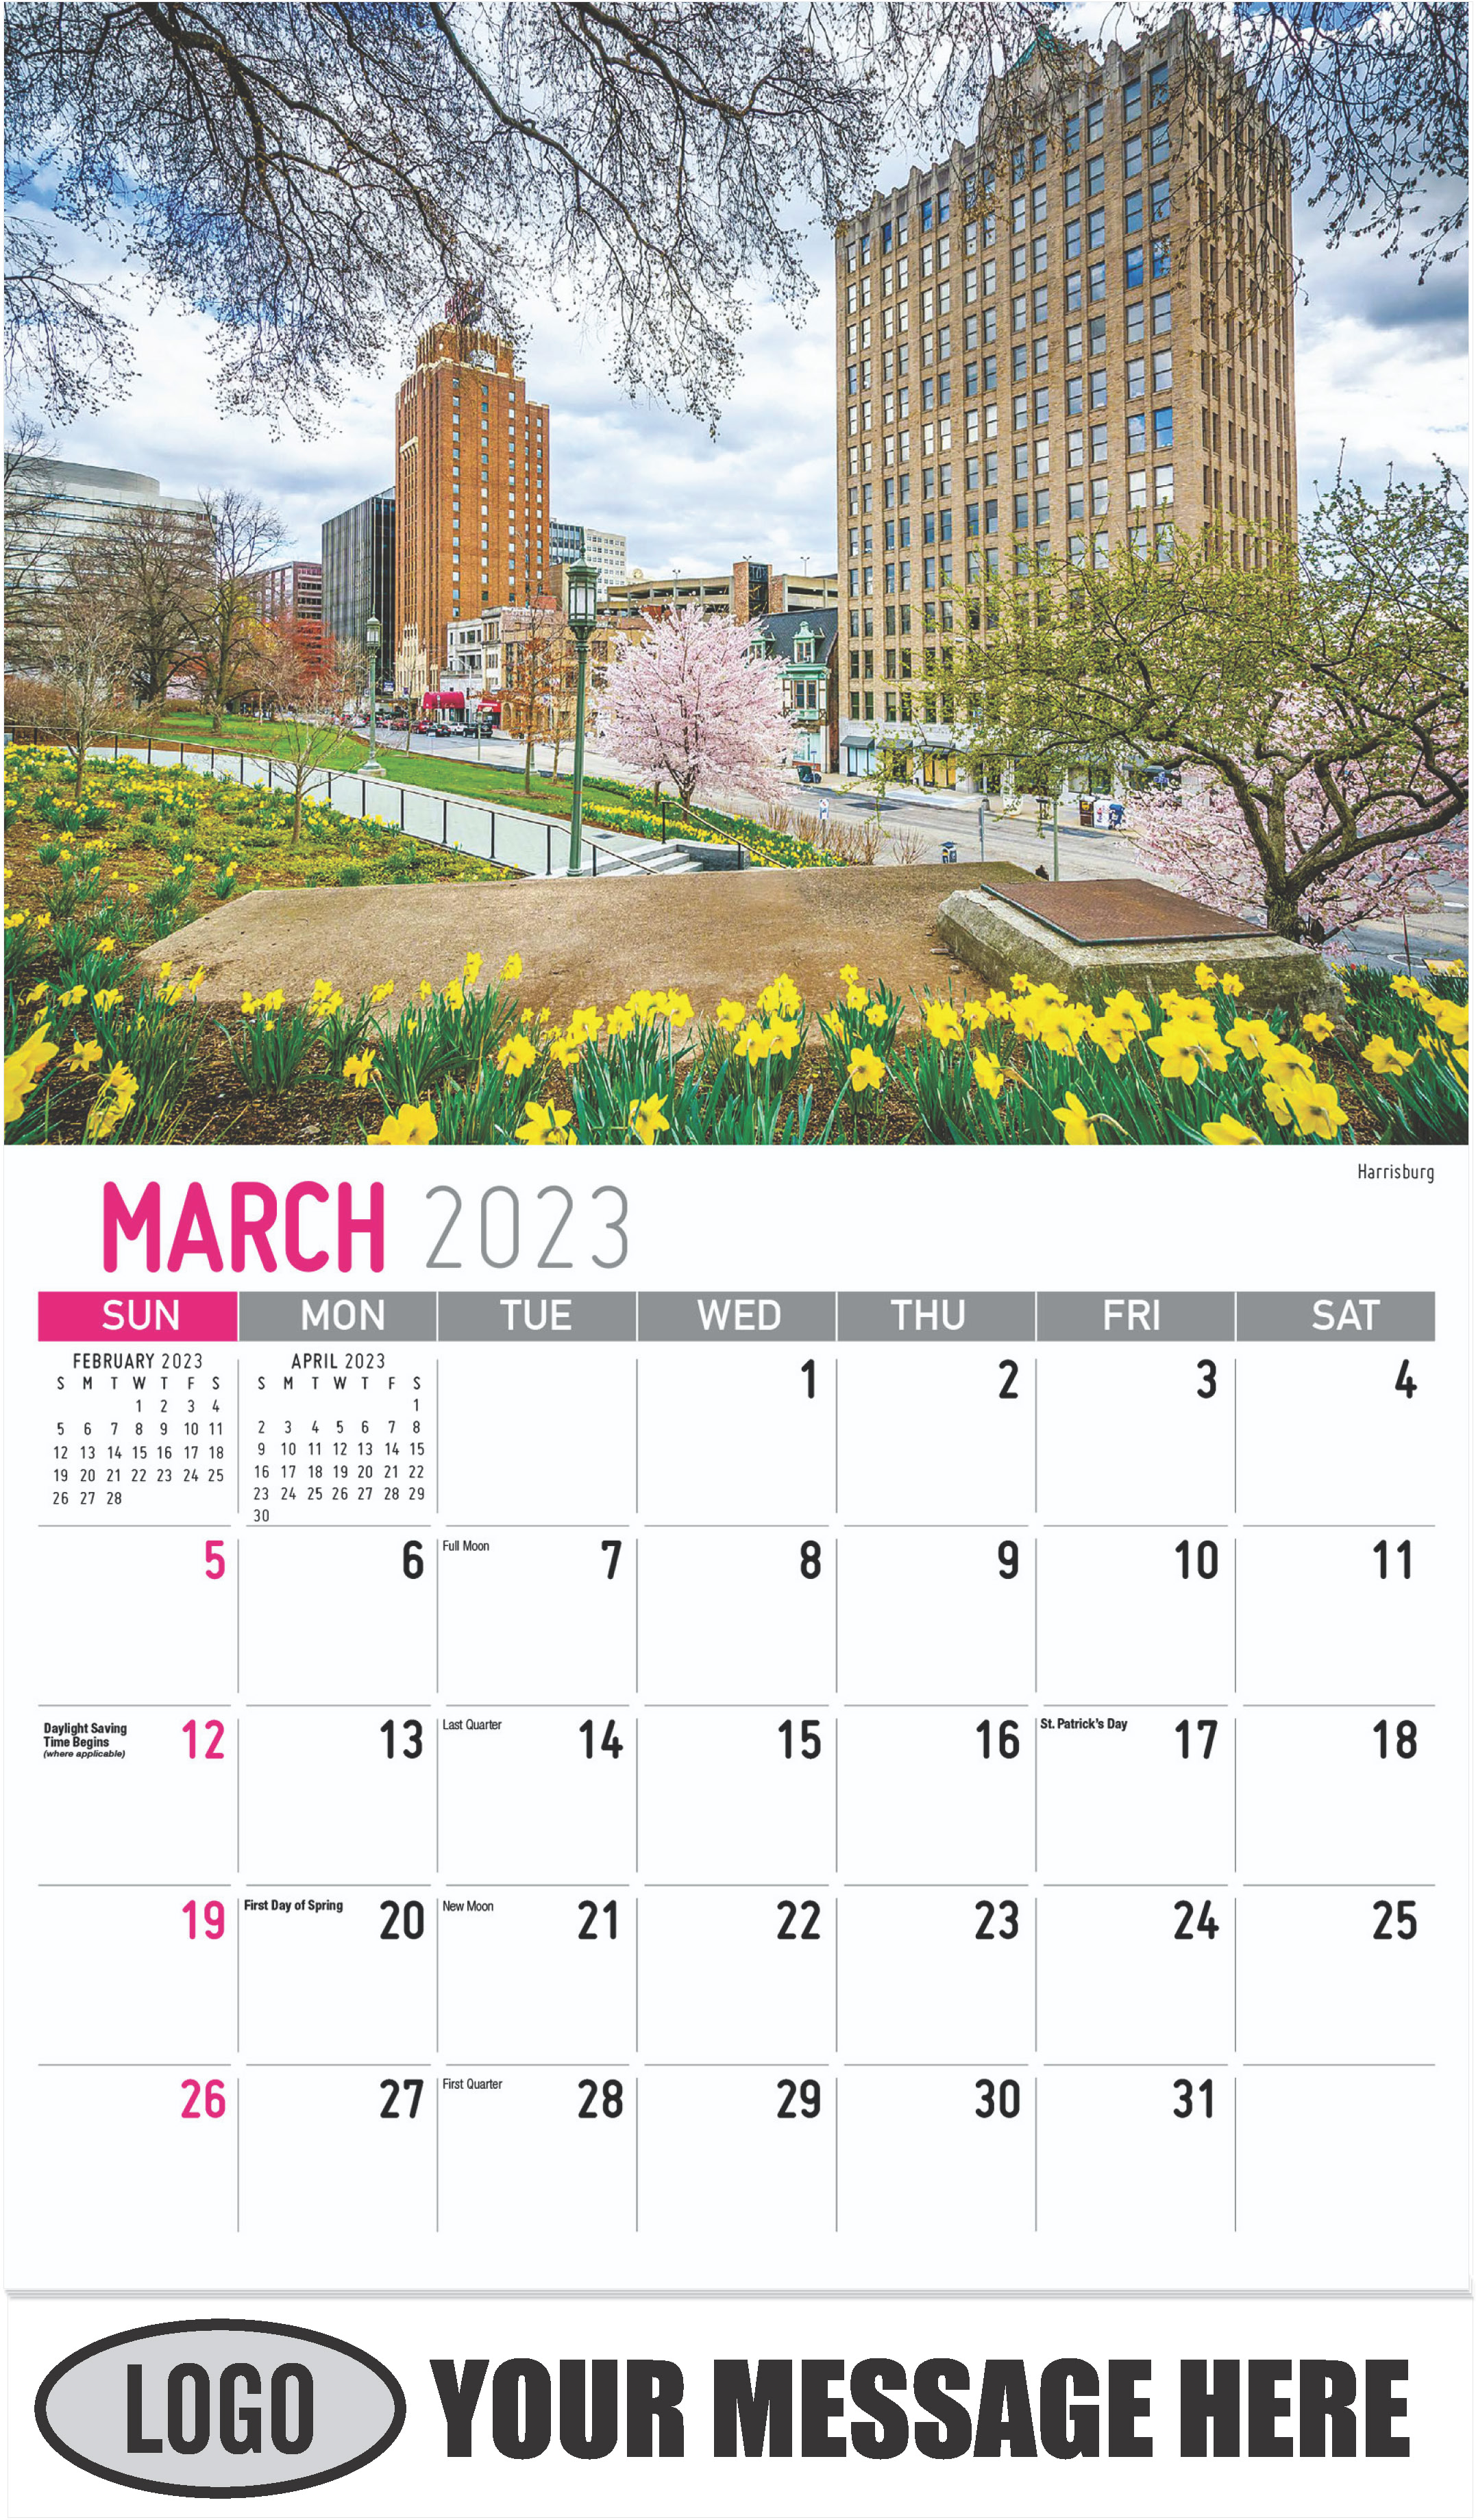 Harrisburg - March - Scenes of Pennsylvania 2023 Promotional Calendar